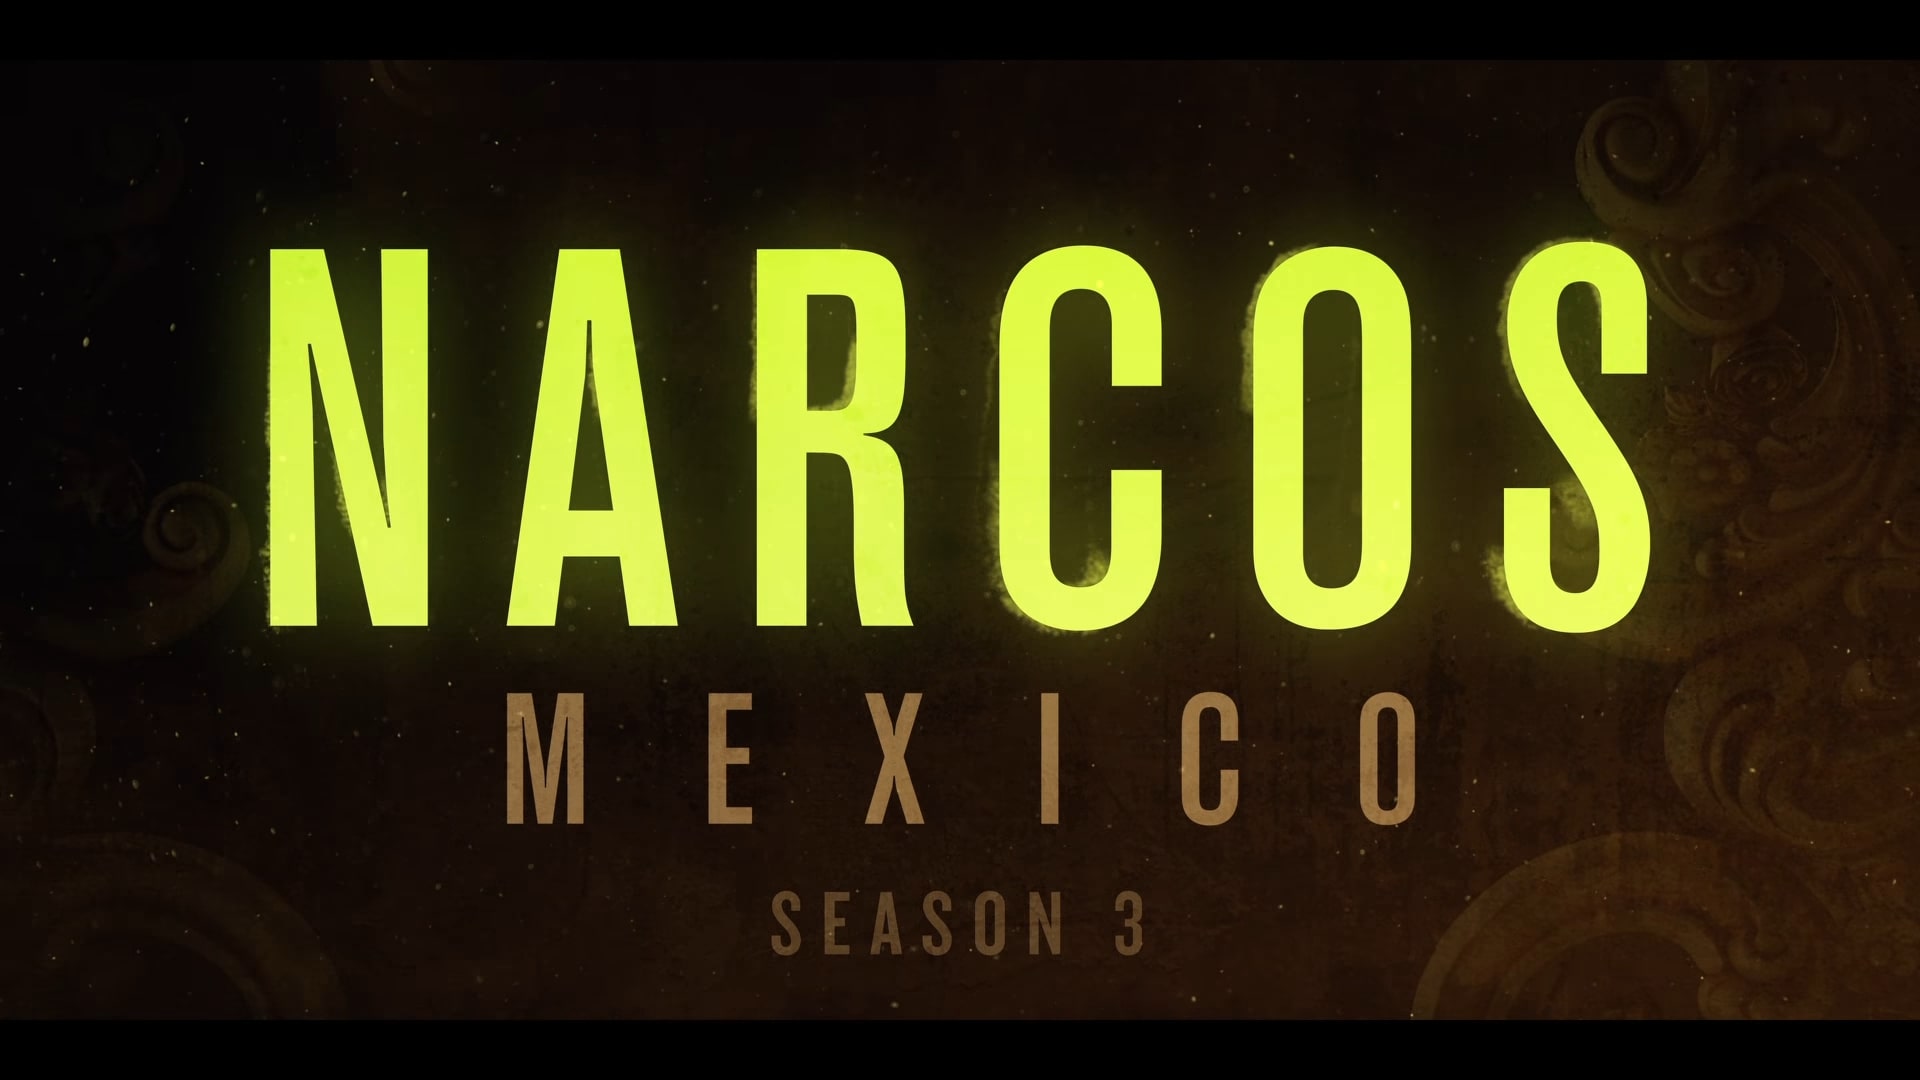 Netflix Narcos Mexico Season 3 Trailer, Coming to Netflix in November 2021